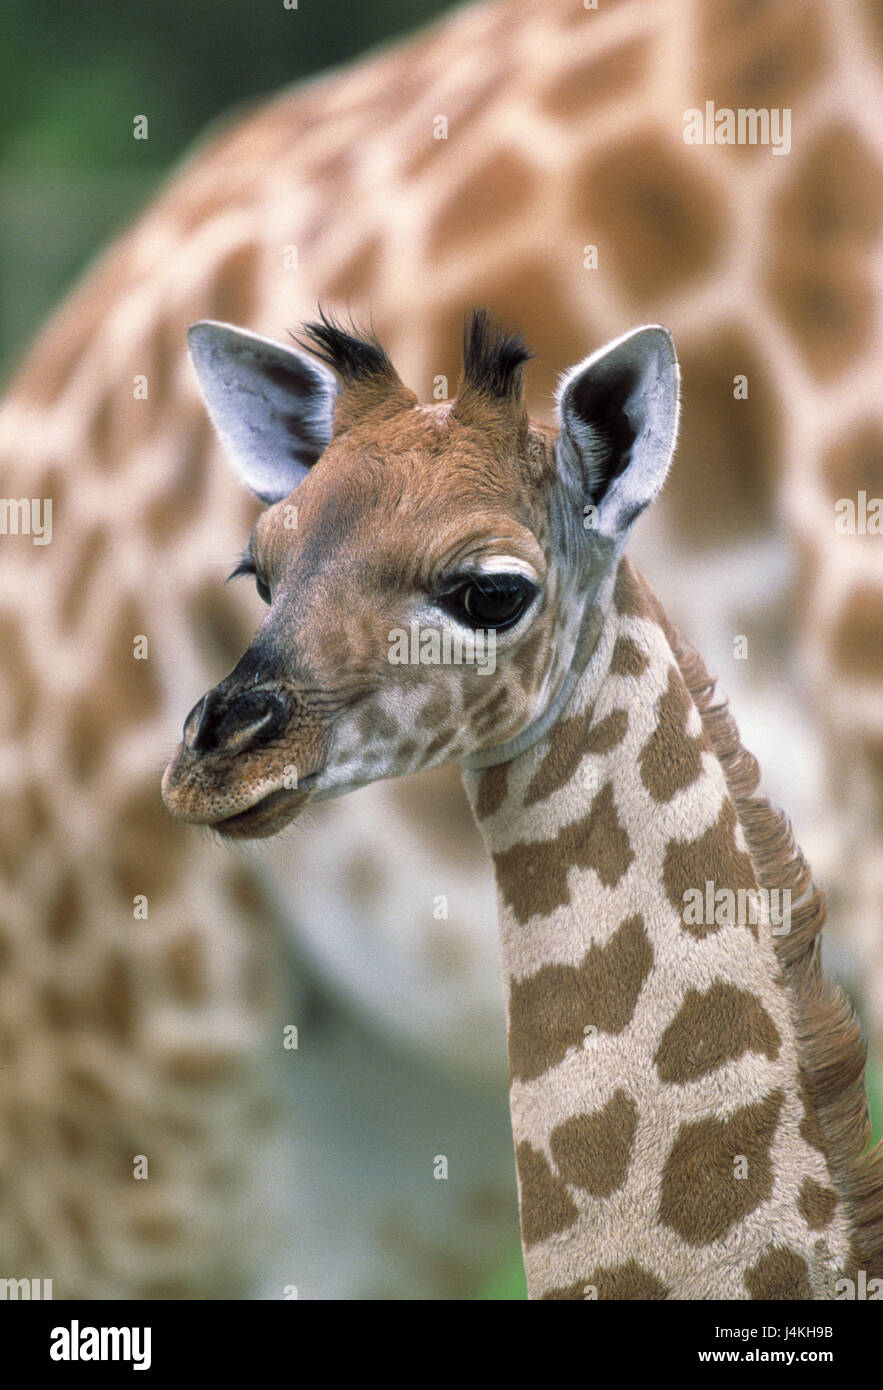 Giraffa Rothschild, Giraffa camelopardalis rothschildi, giovane animale animali, animali selvatici, gli animali giovani, Uganda giraffe, Baringo giraffe, giraffe, giraffe, animali biungulati, mammifero, giovani, vicino, Foto Stock